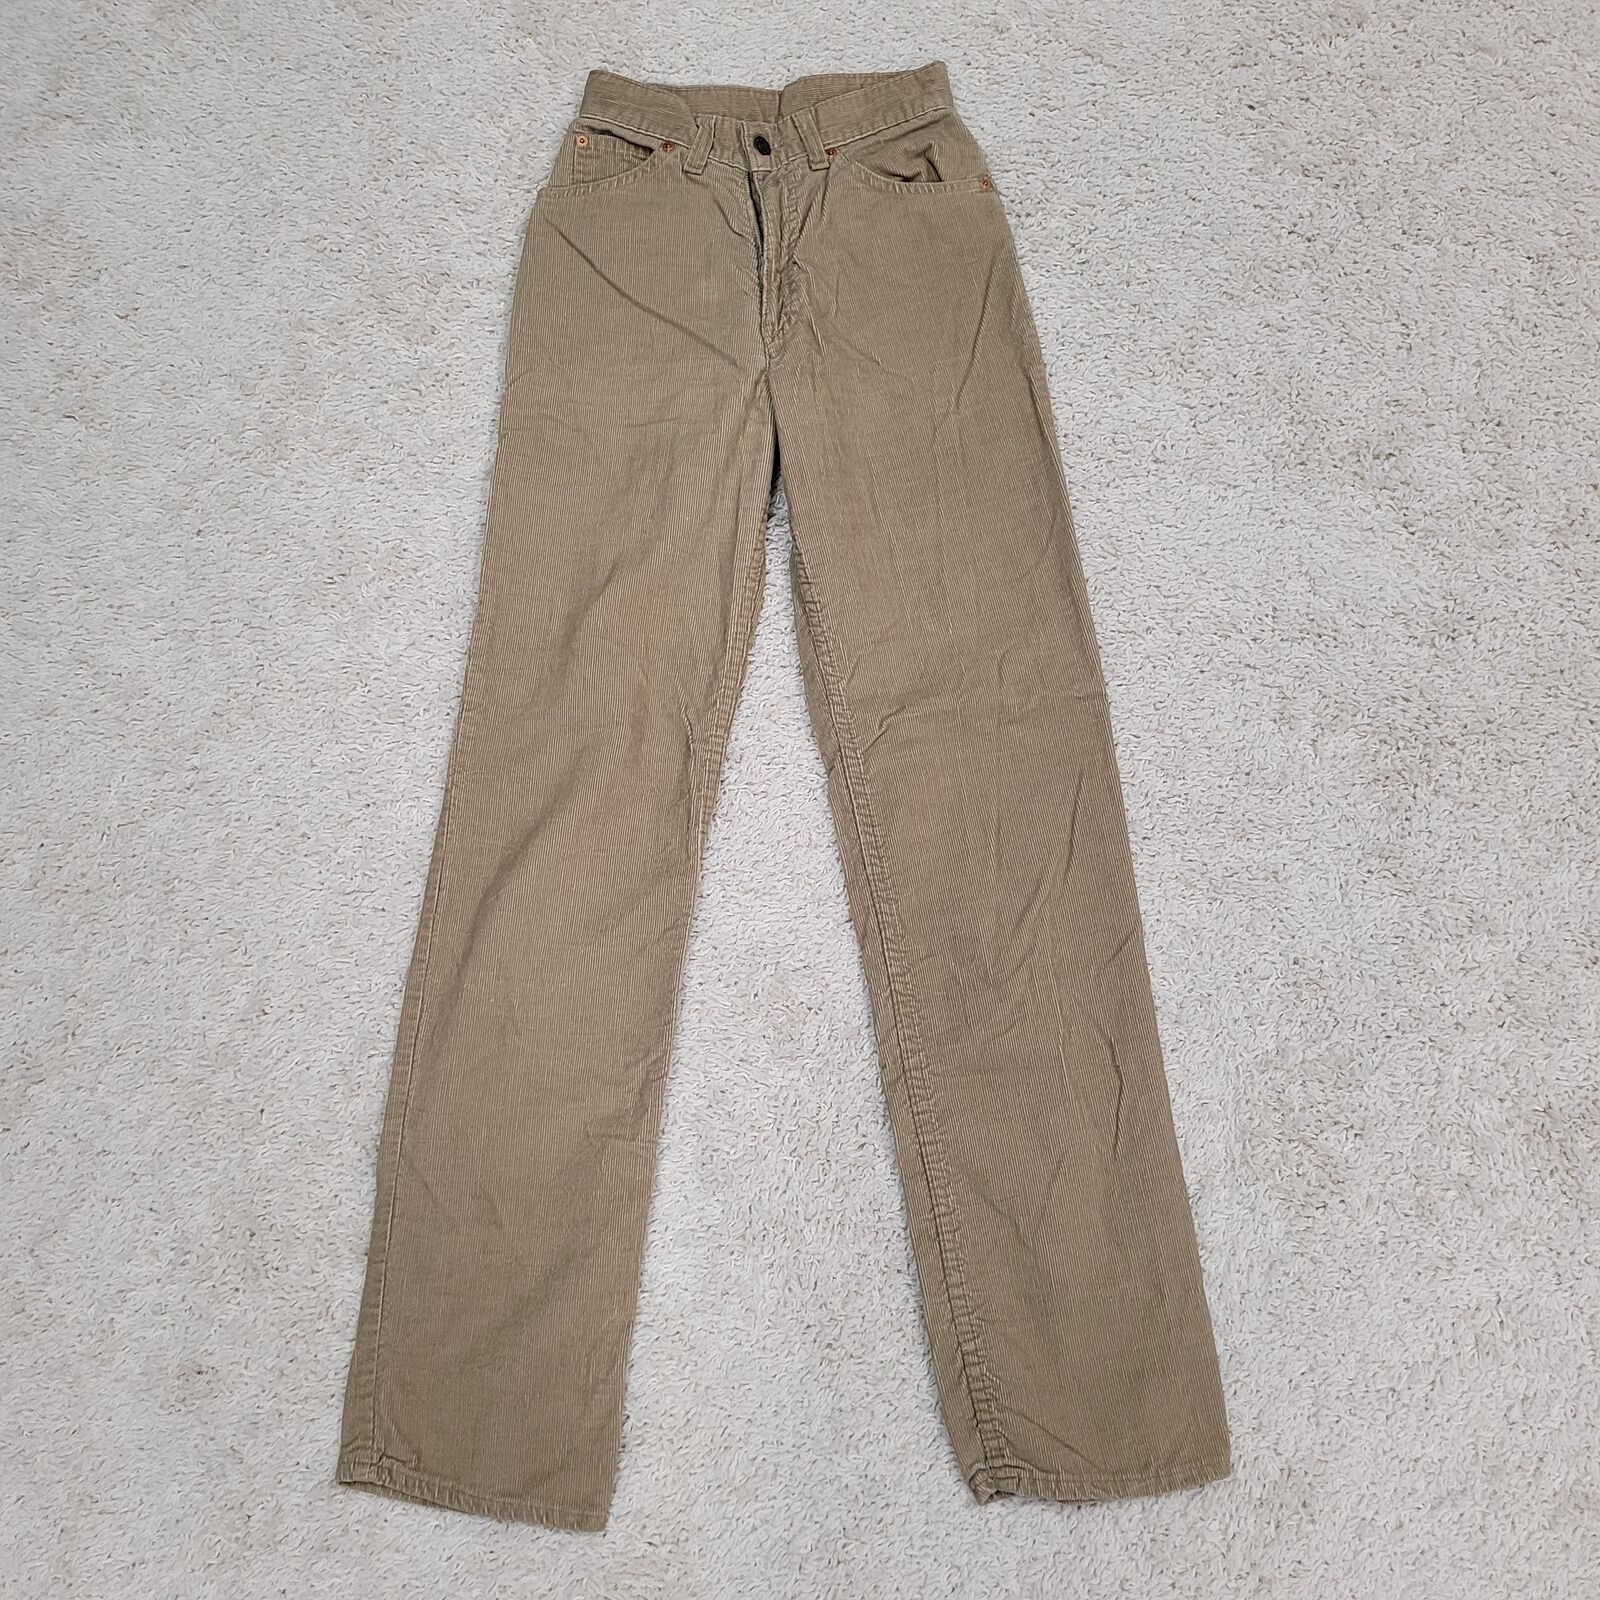 Vintage BIG-E LEVIS 544 High-Rise Corduroy Pants Womens 23x31 (Tag Size 5) TALON